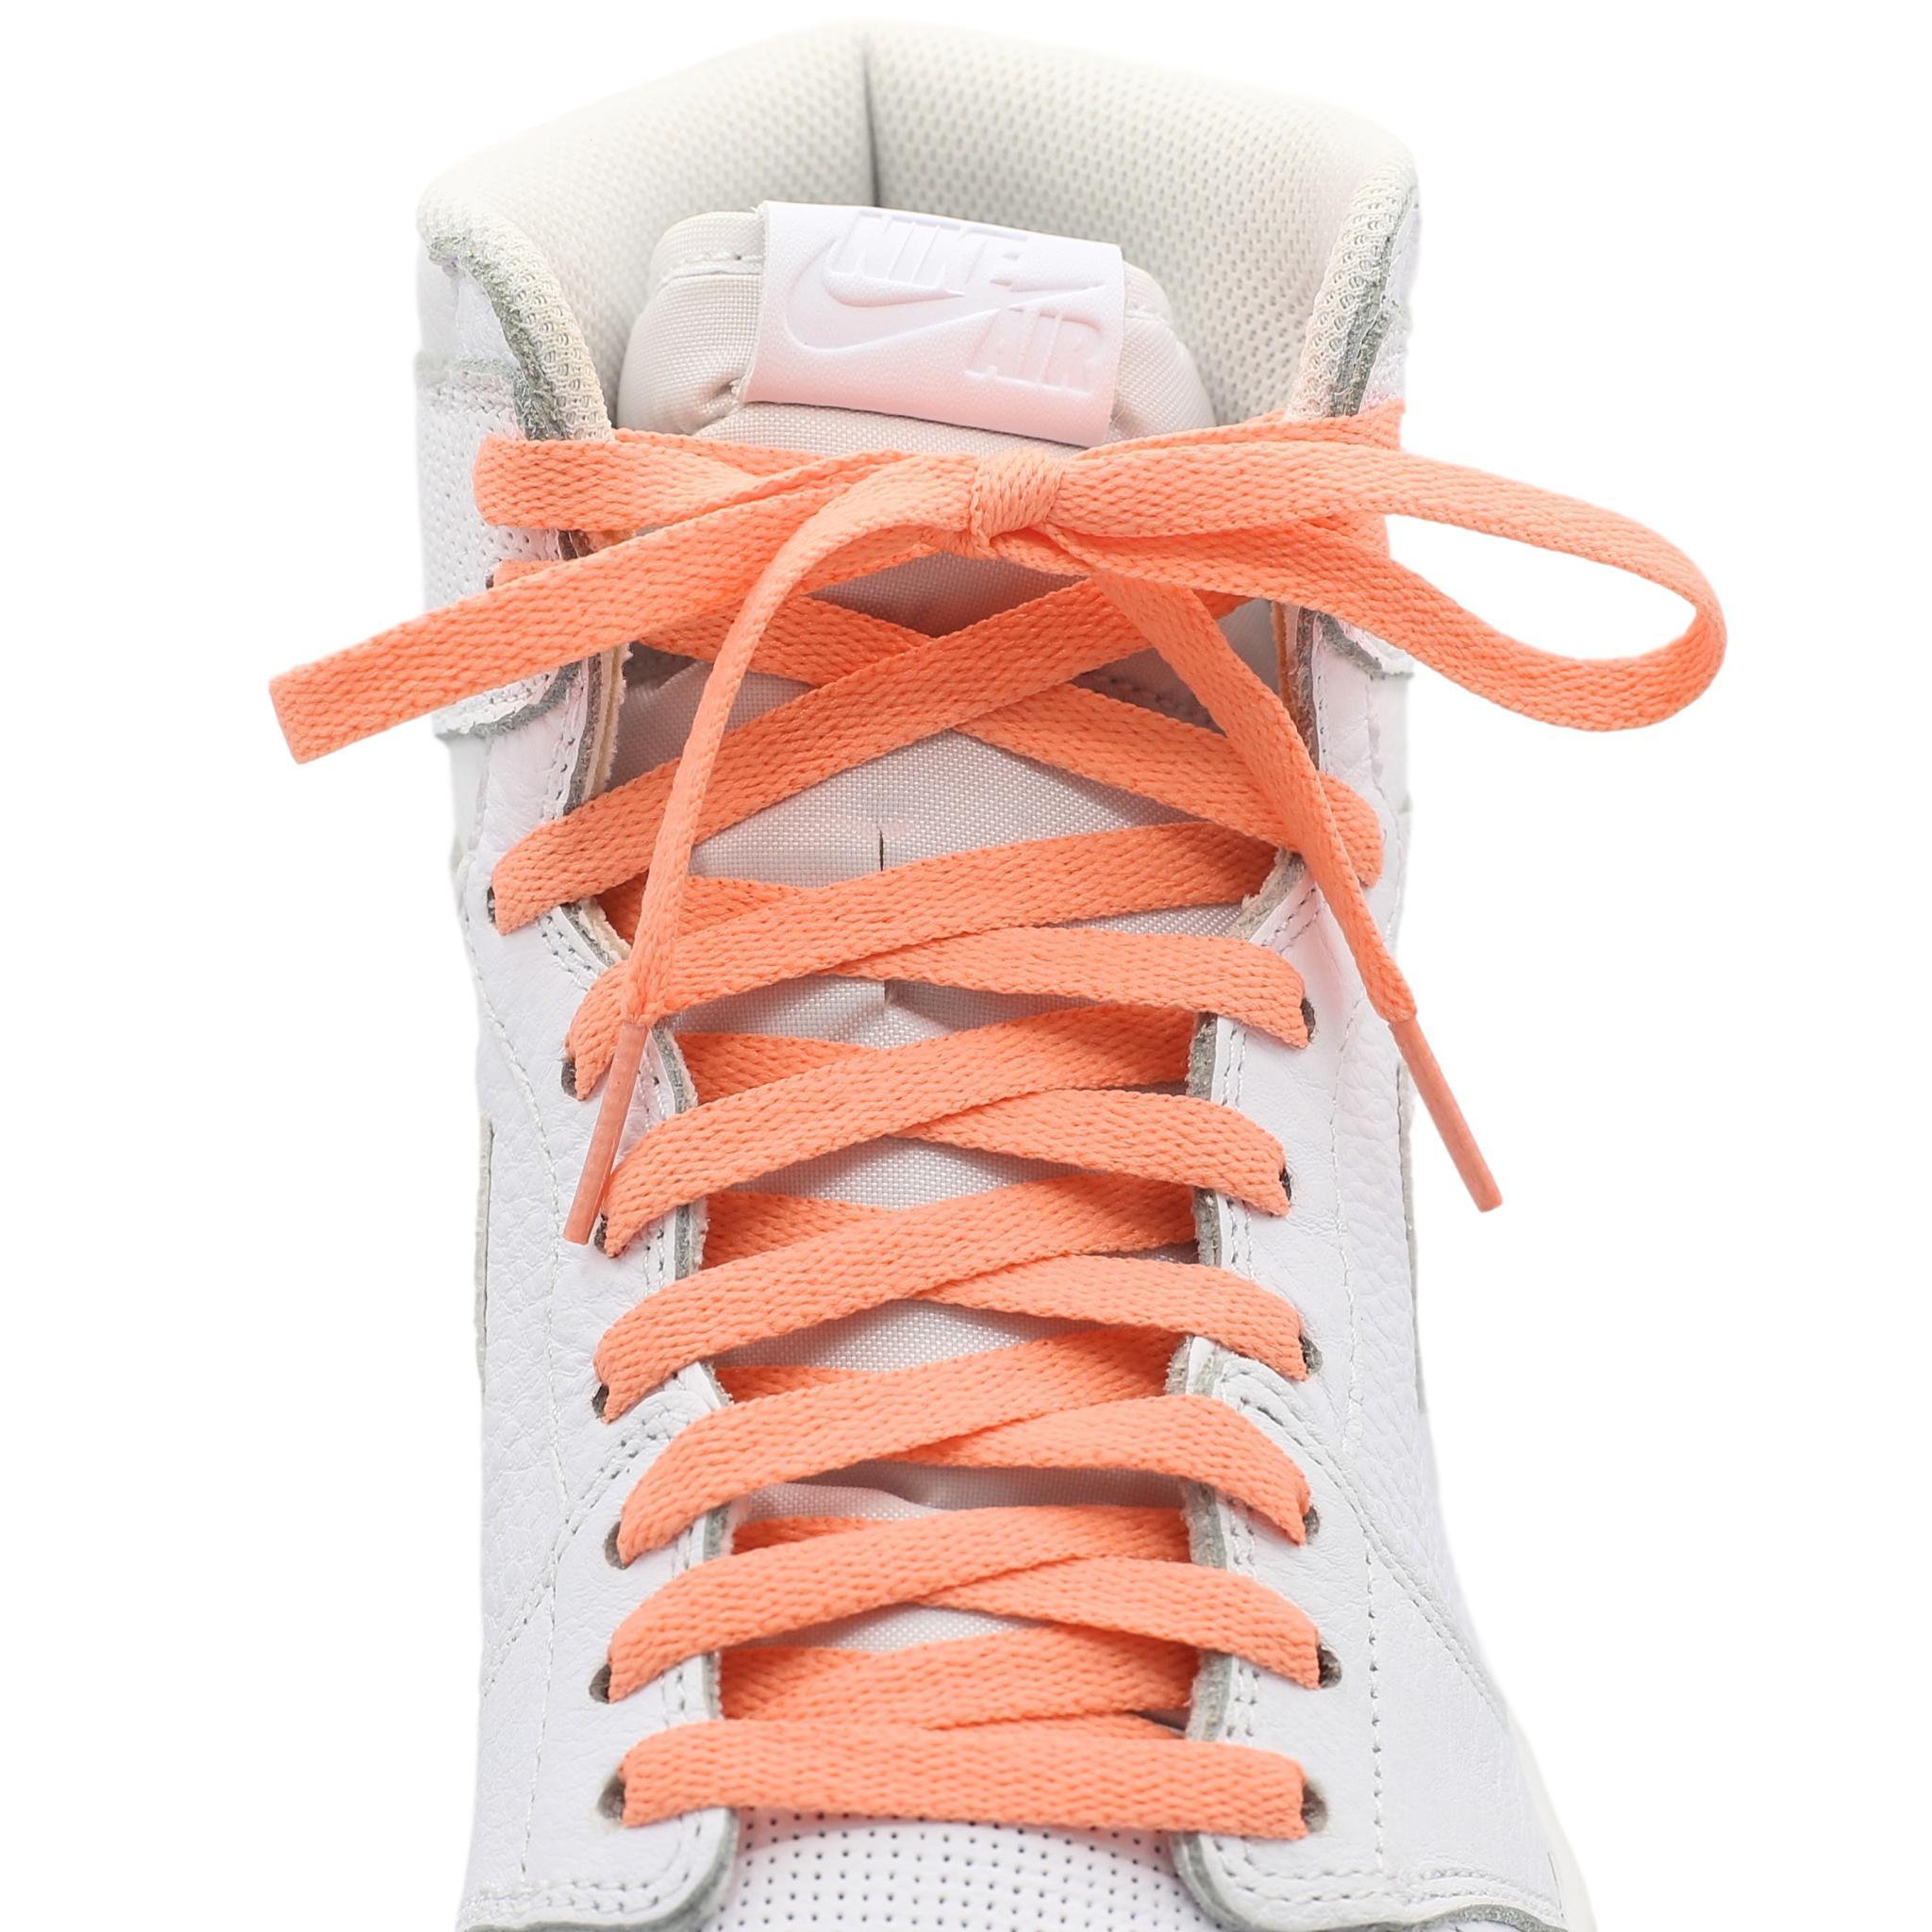 Jordan 1 Replacement Shoelaces